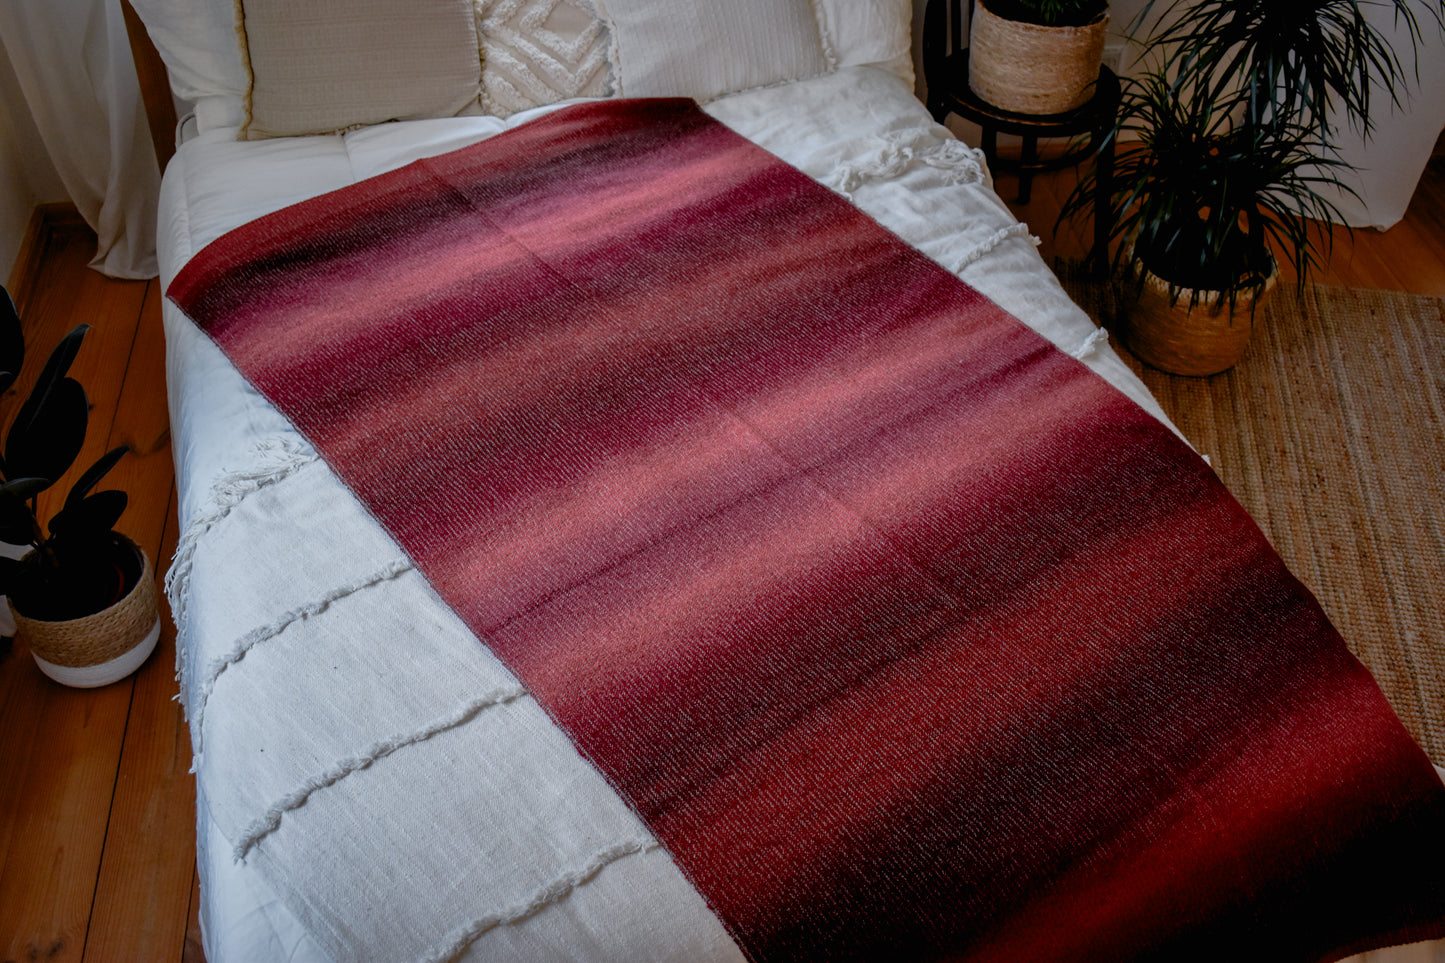 Hand-woven reddish wool blanket / plaid (BATE 5)